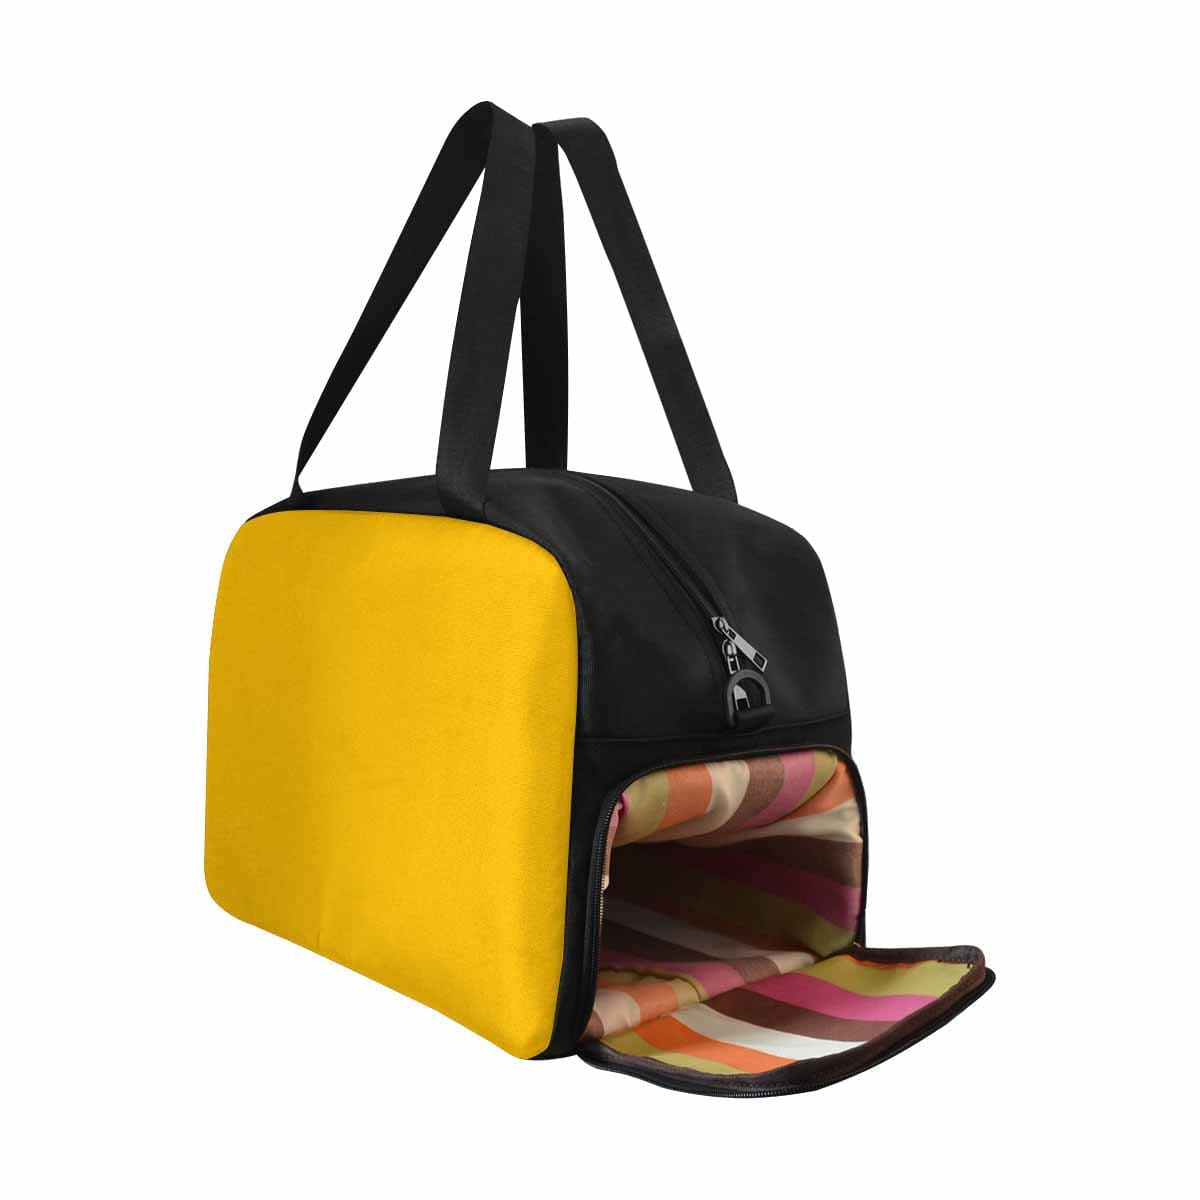 Amber Orange Tote And Crossbody Travel Bag - Bags | Travel Bags | Crossbody